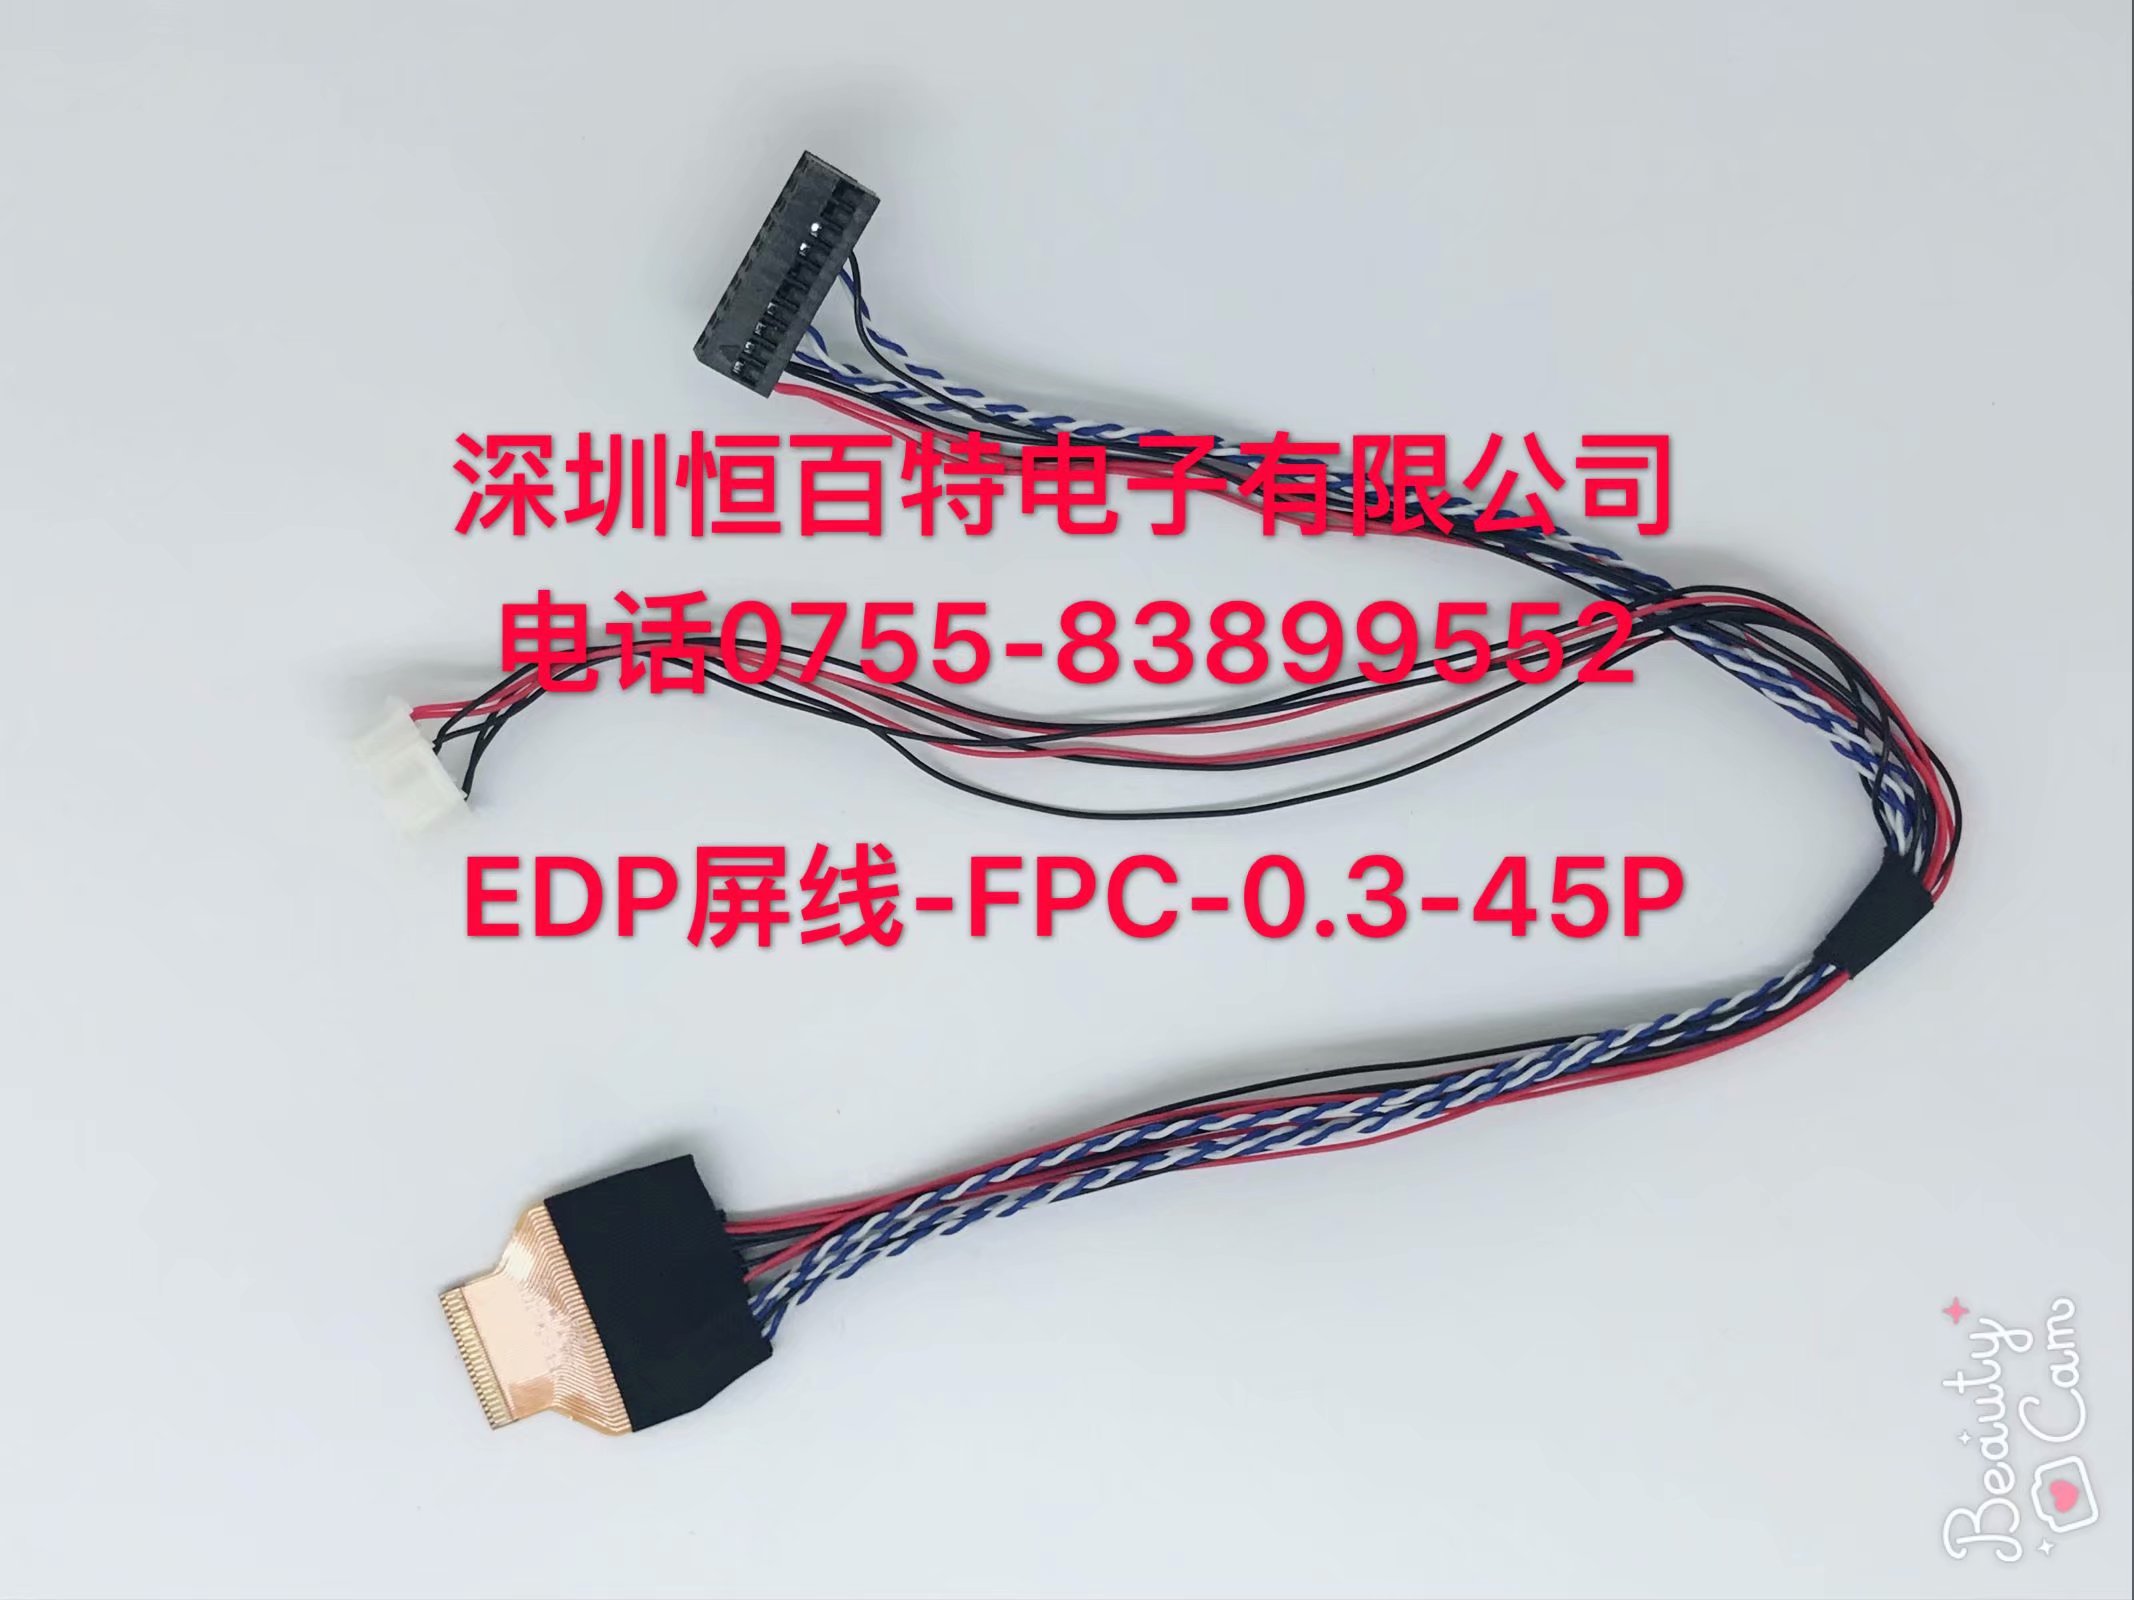 EDP-FPC-0.3-45P